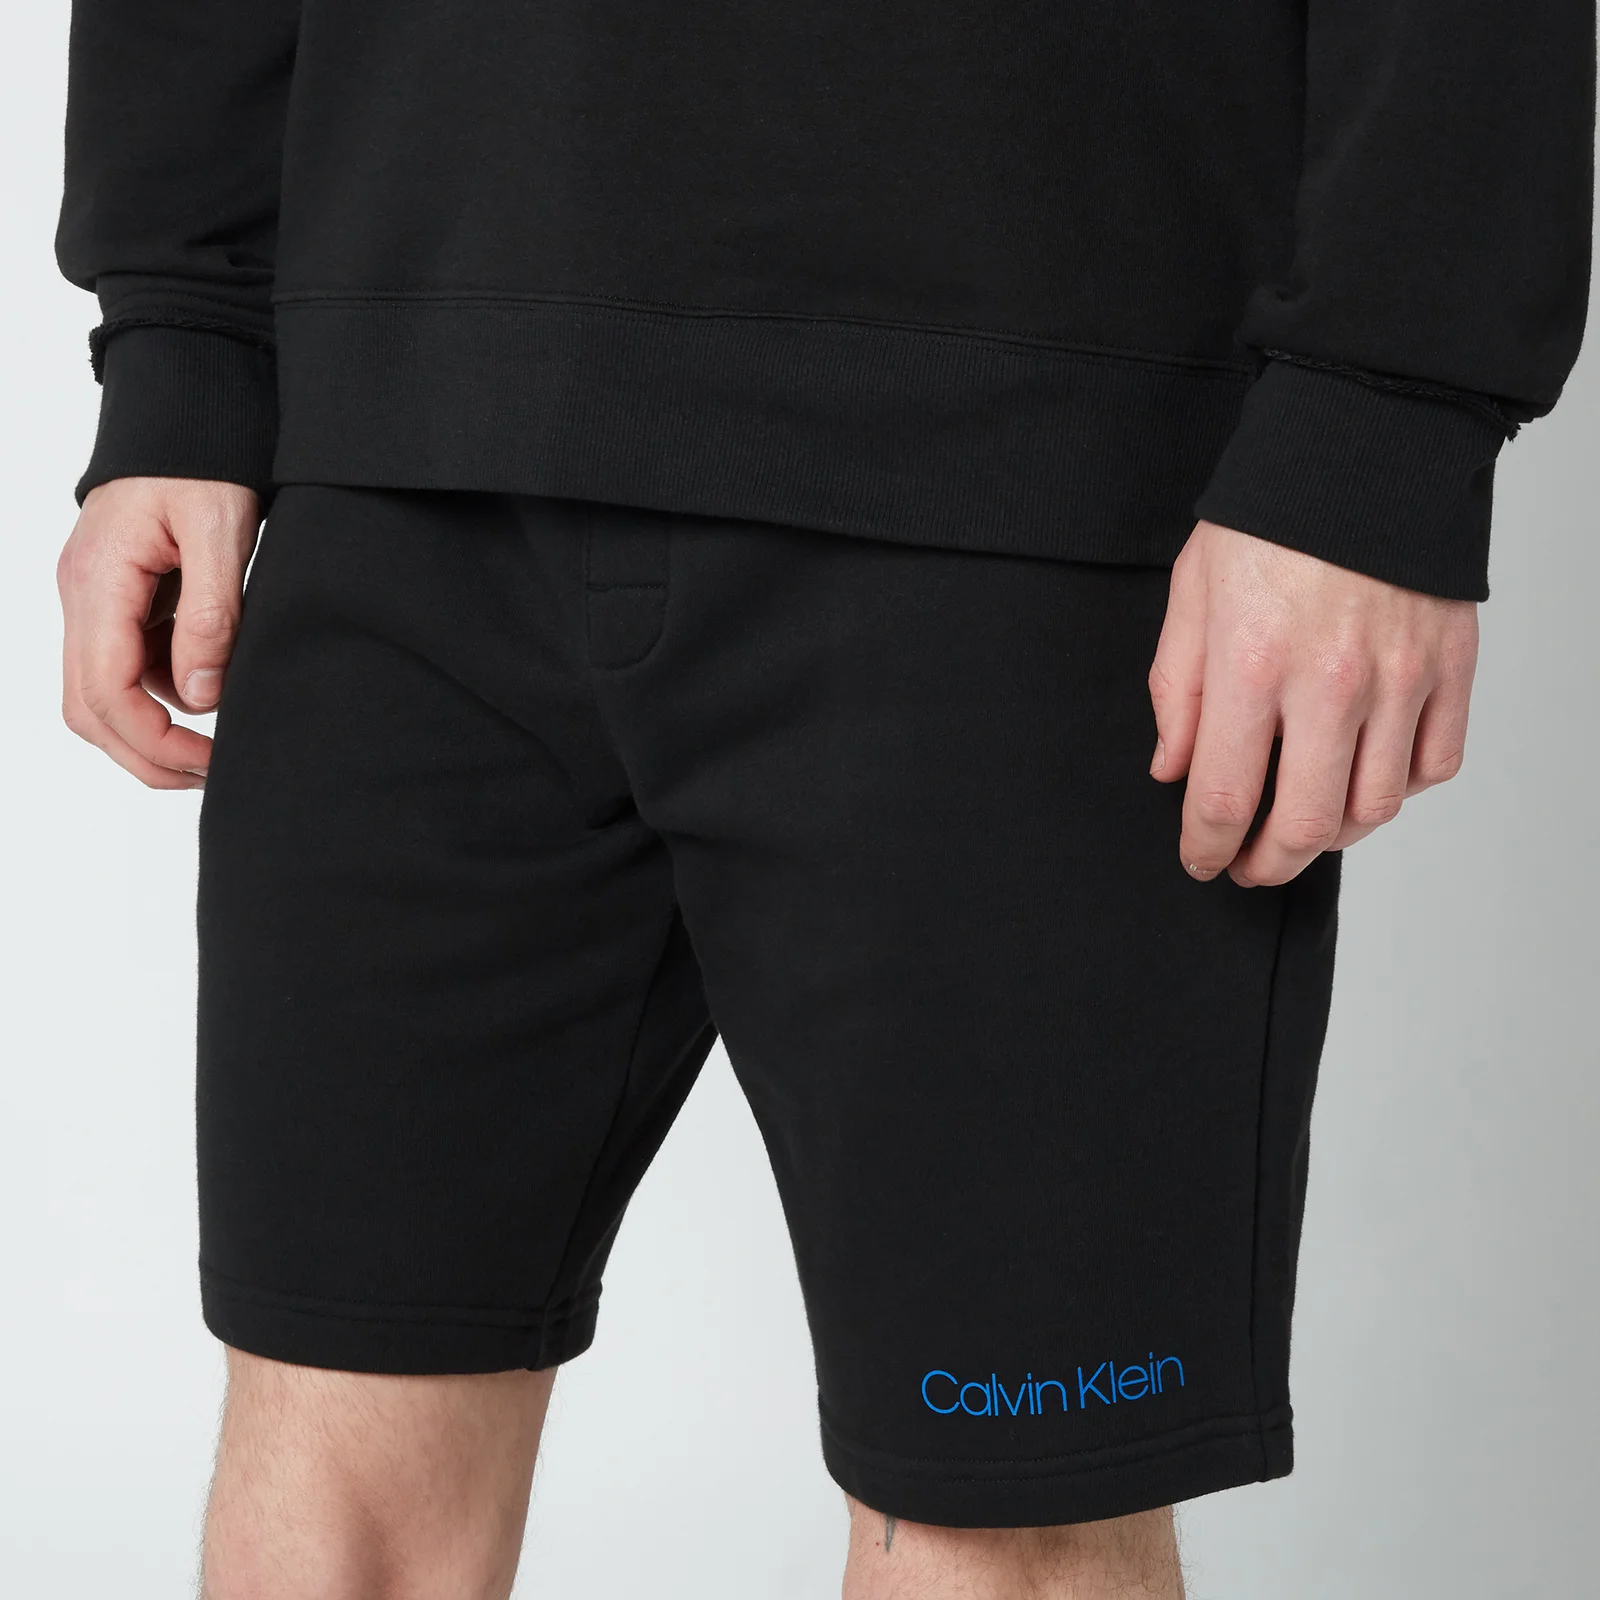 Calvin Klein Men's Sleep Shorts - Black Image 1